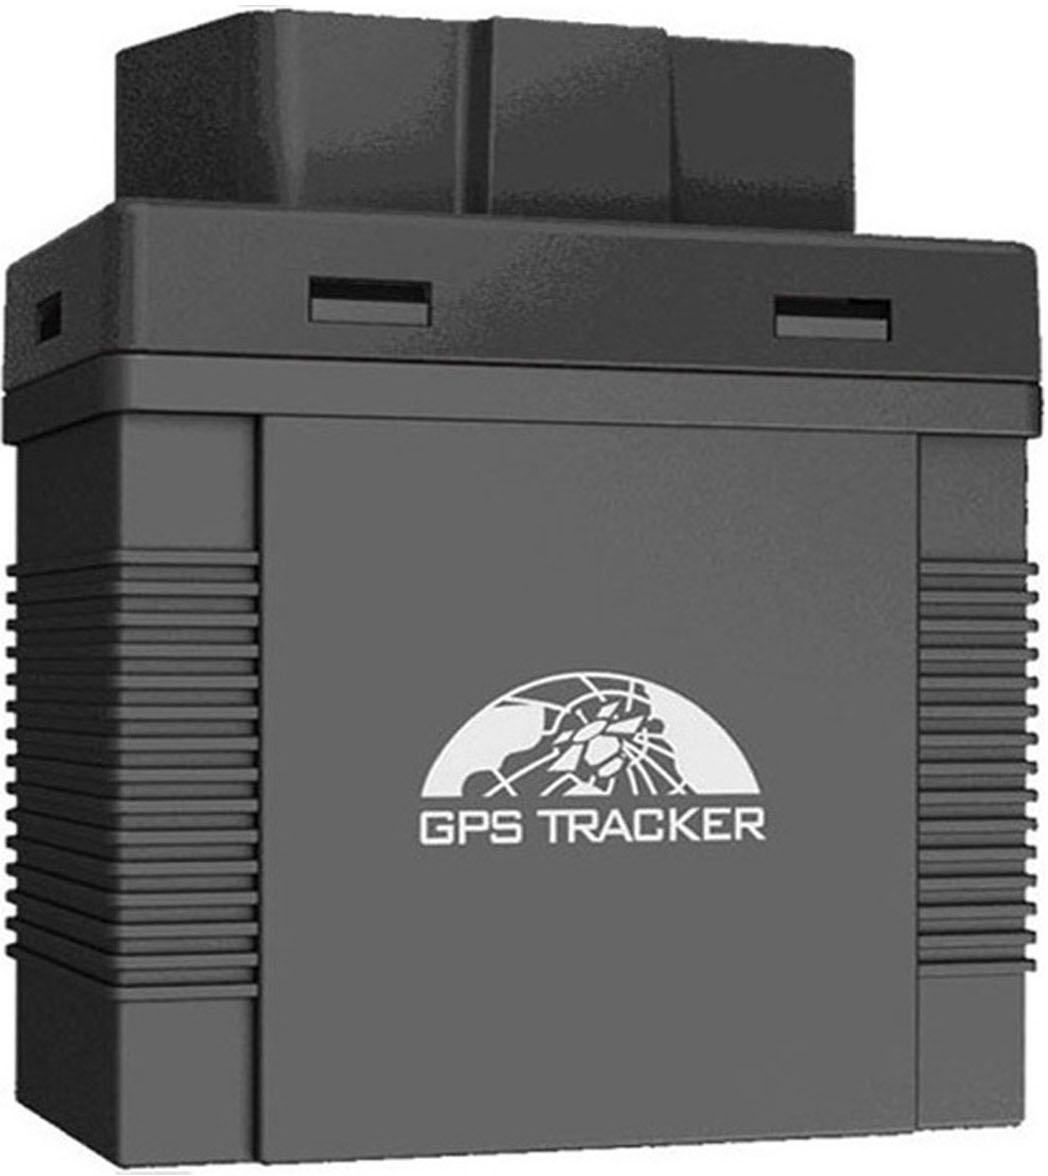 Itrack Obd Gps Tracker